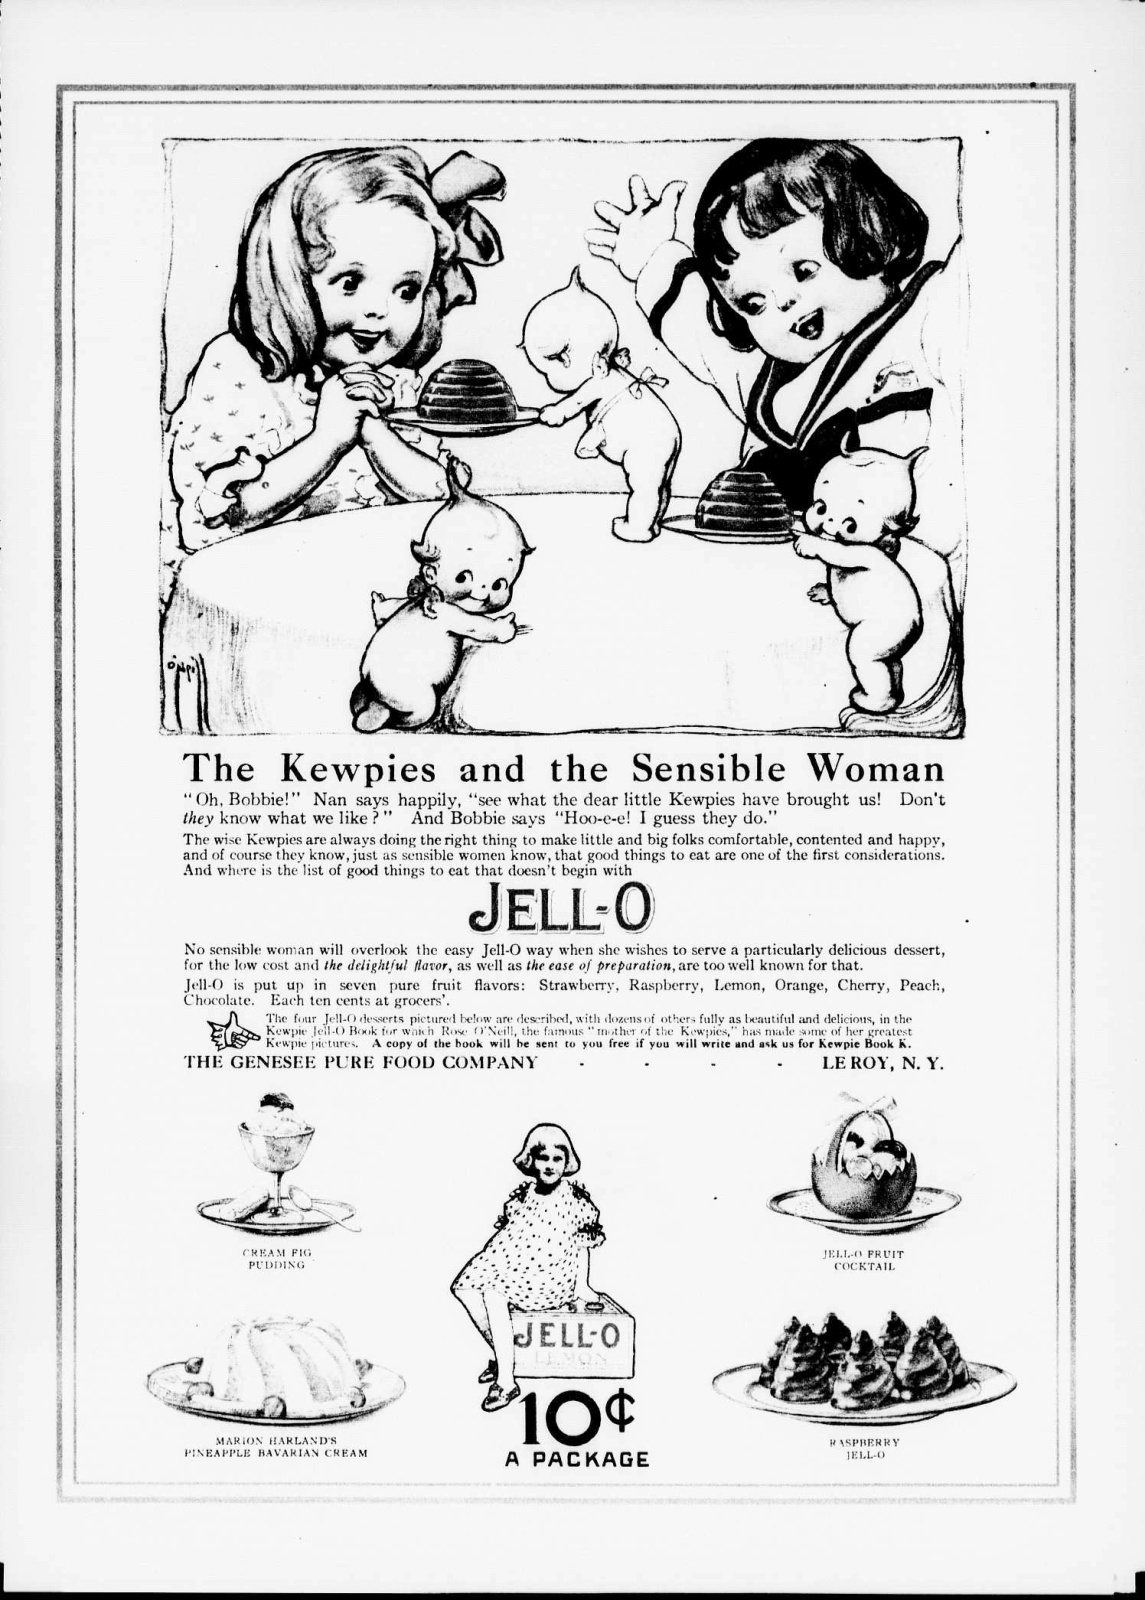 1915 Jell-O ad featuring Kewpies